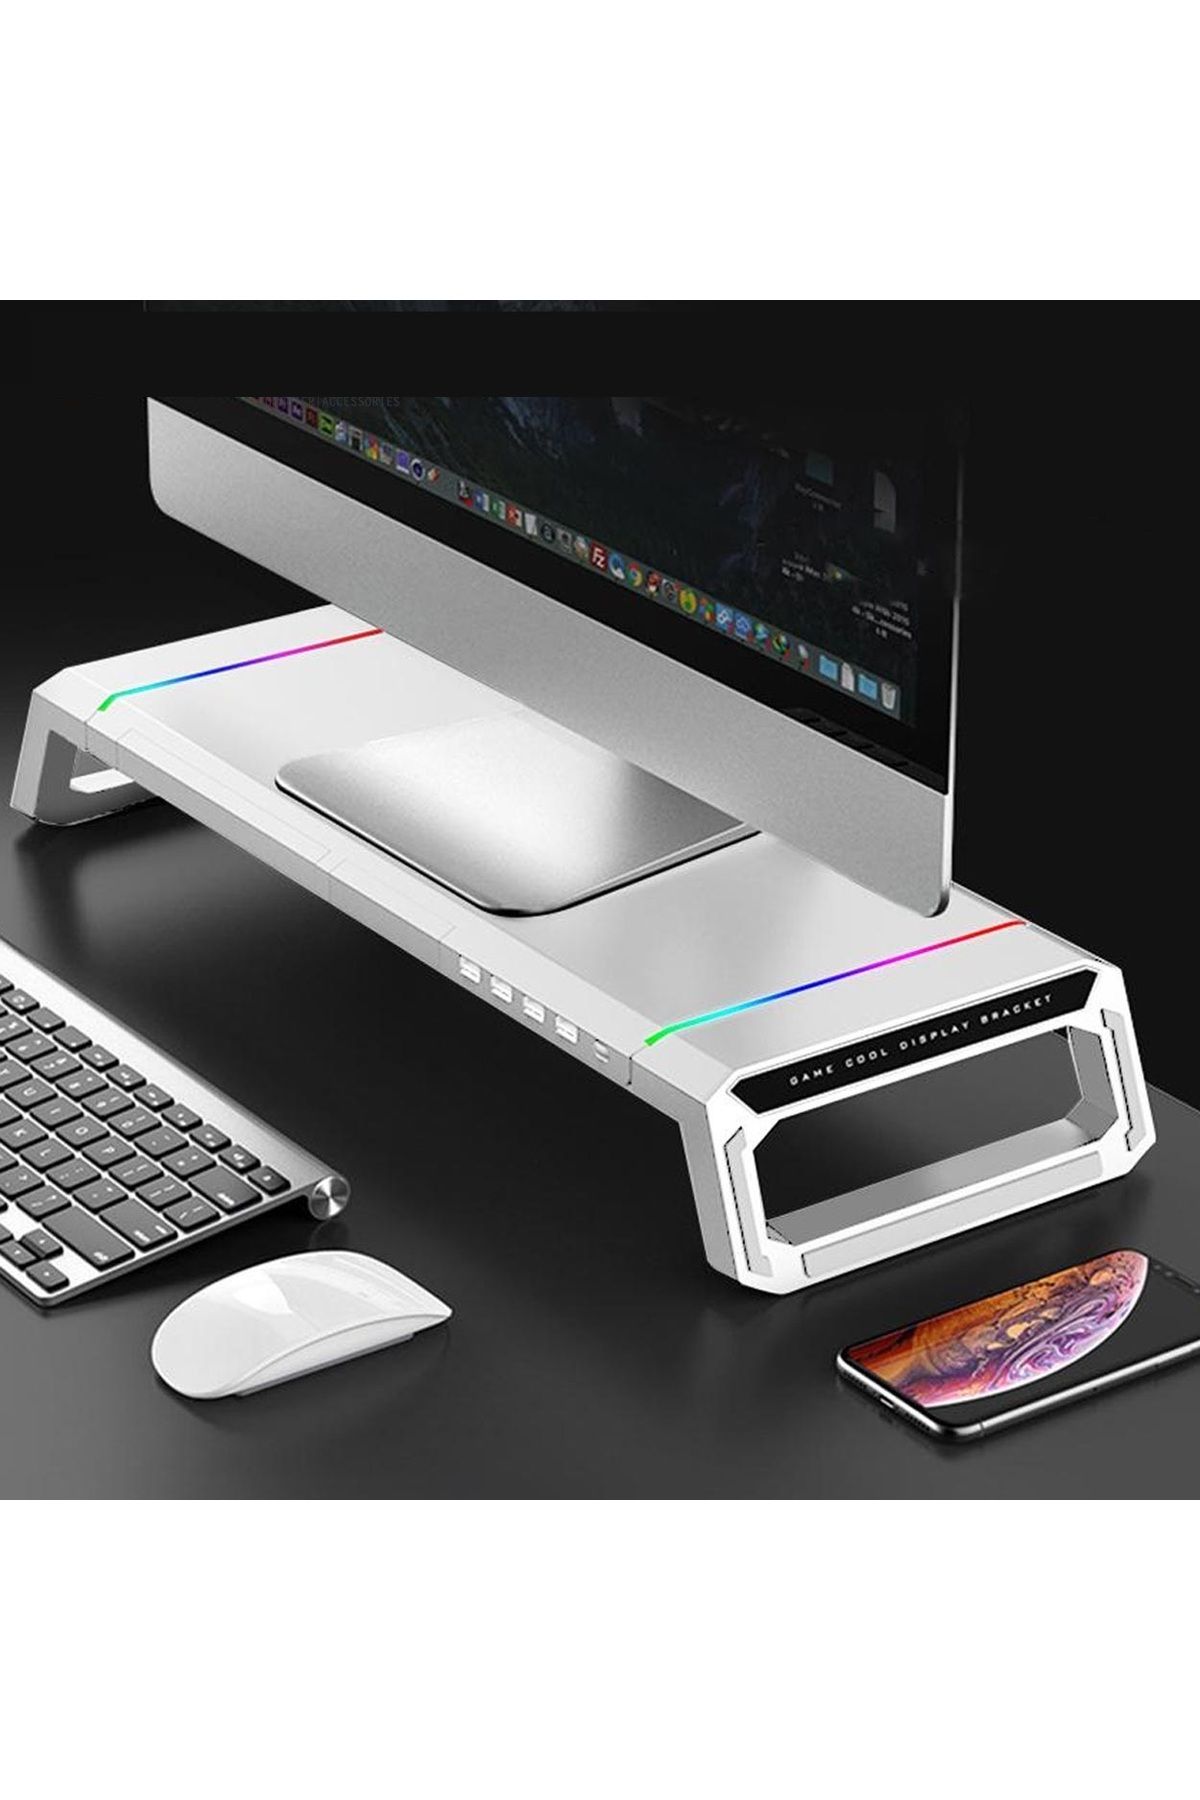 JUNGLEE Laptop Sehpası RGB Işıklı Mönitör Standı Ekran Altlığı 4 Usb Hub Telefon Tutuculu